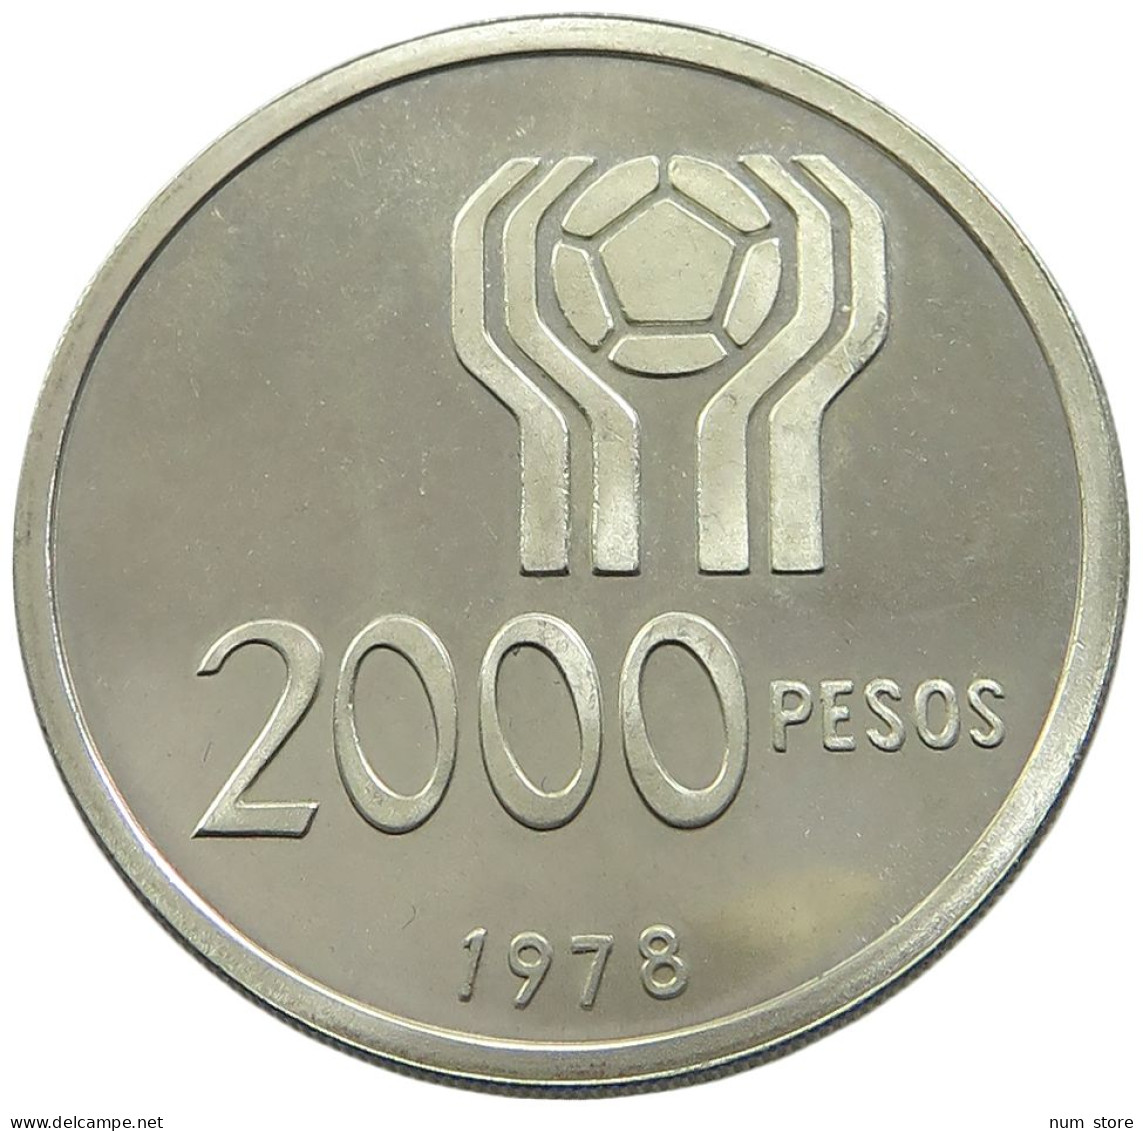 ARGENTINA 2000 PESOS 1978 PROOF #sm14 0953 - Argentina